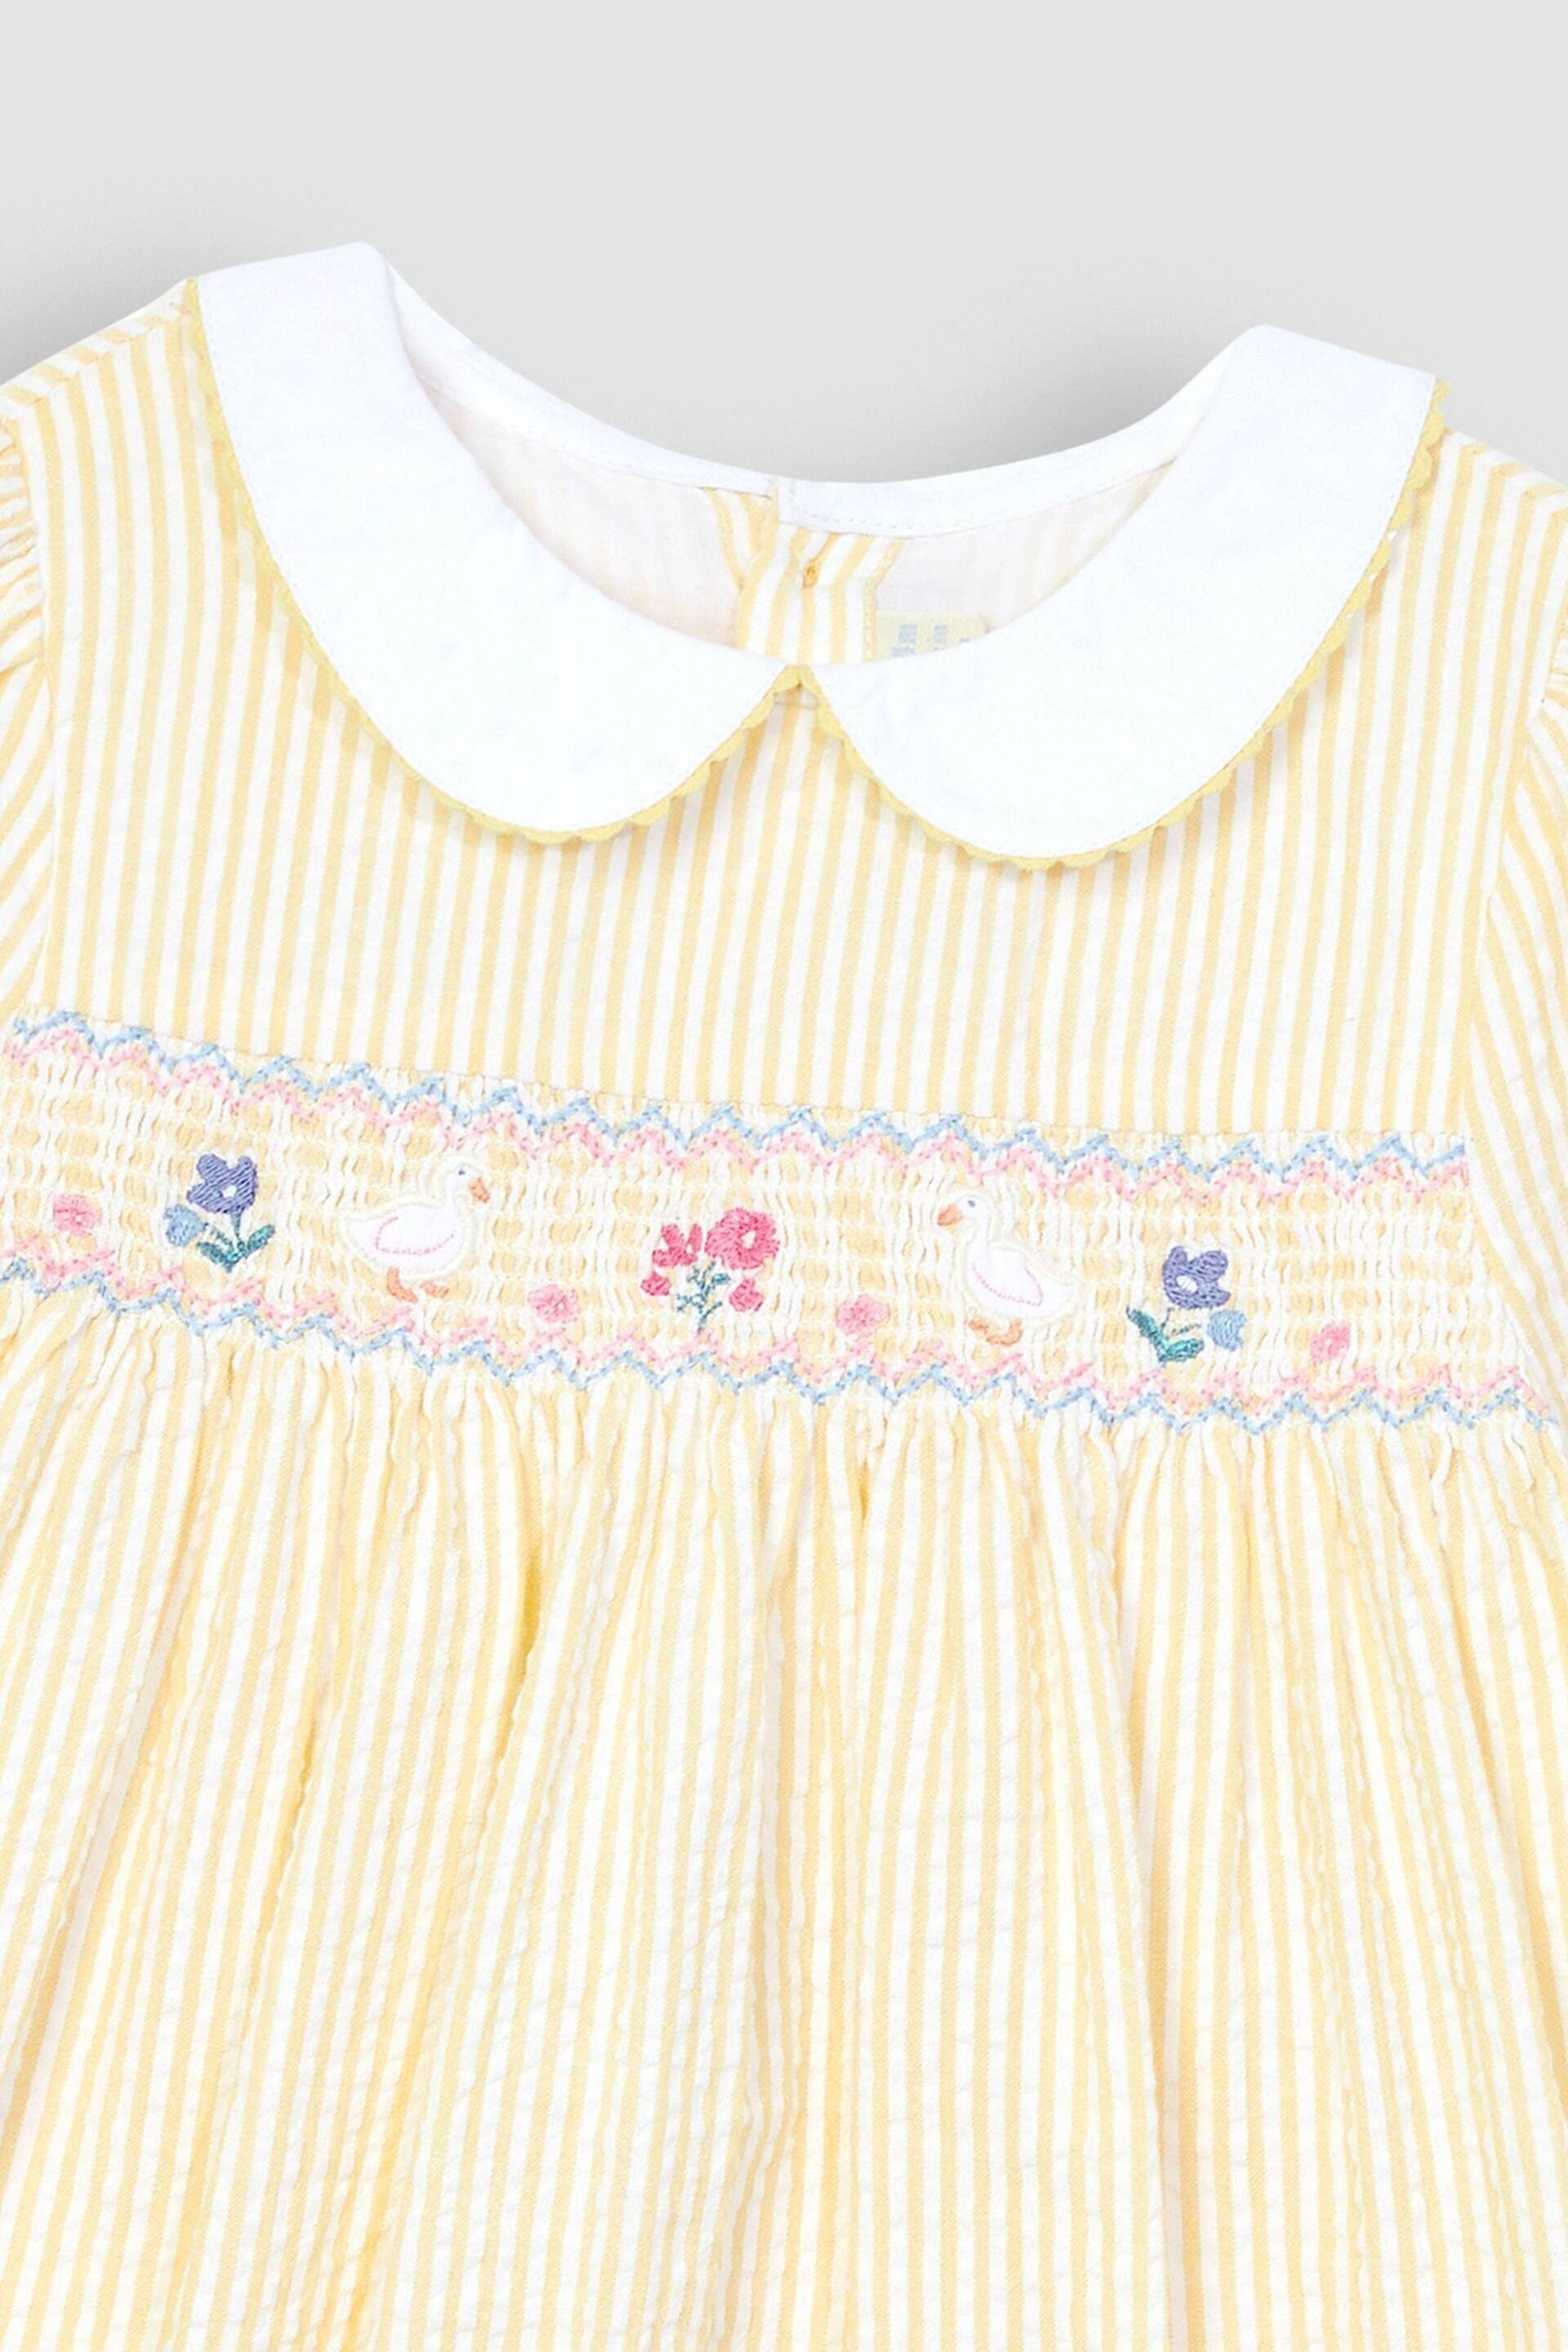 JoJo Maman Bébé Yellow Duck Embroidered Smocked Dress - Image 7 of 7